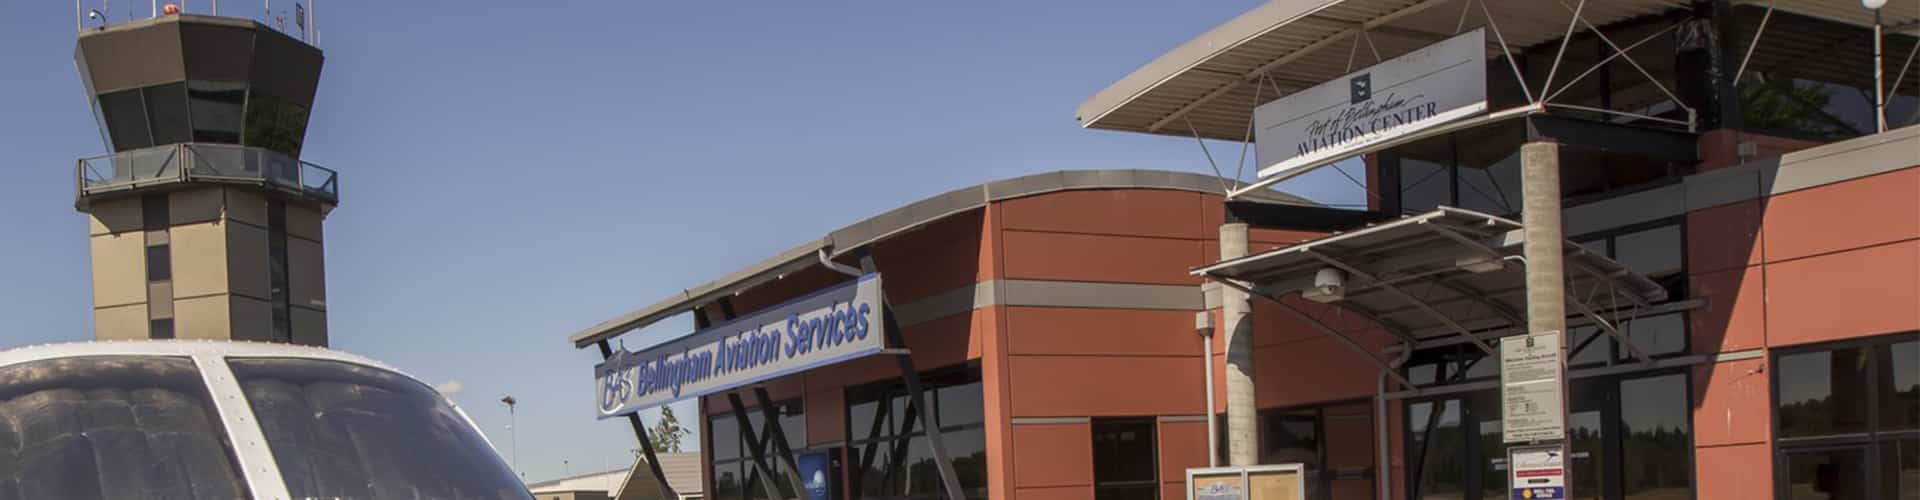 Bellingham Aviation Services building